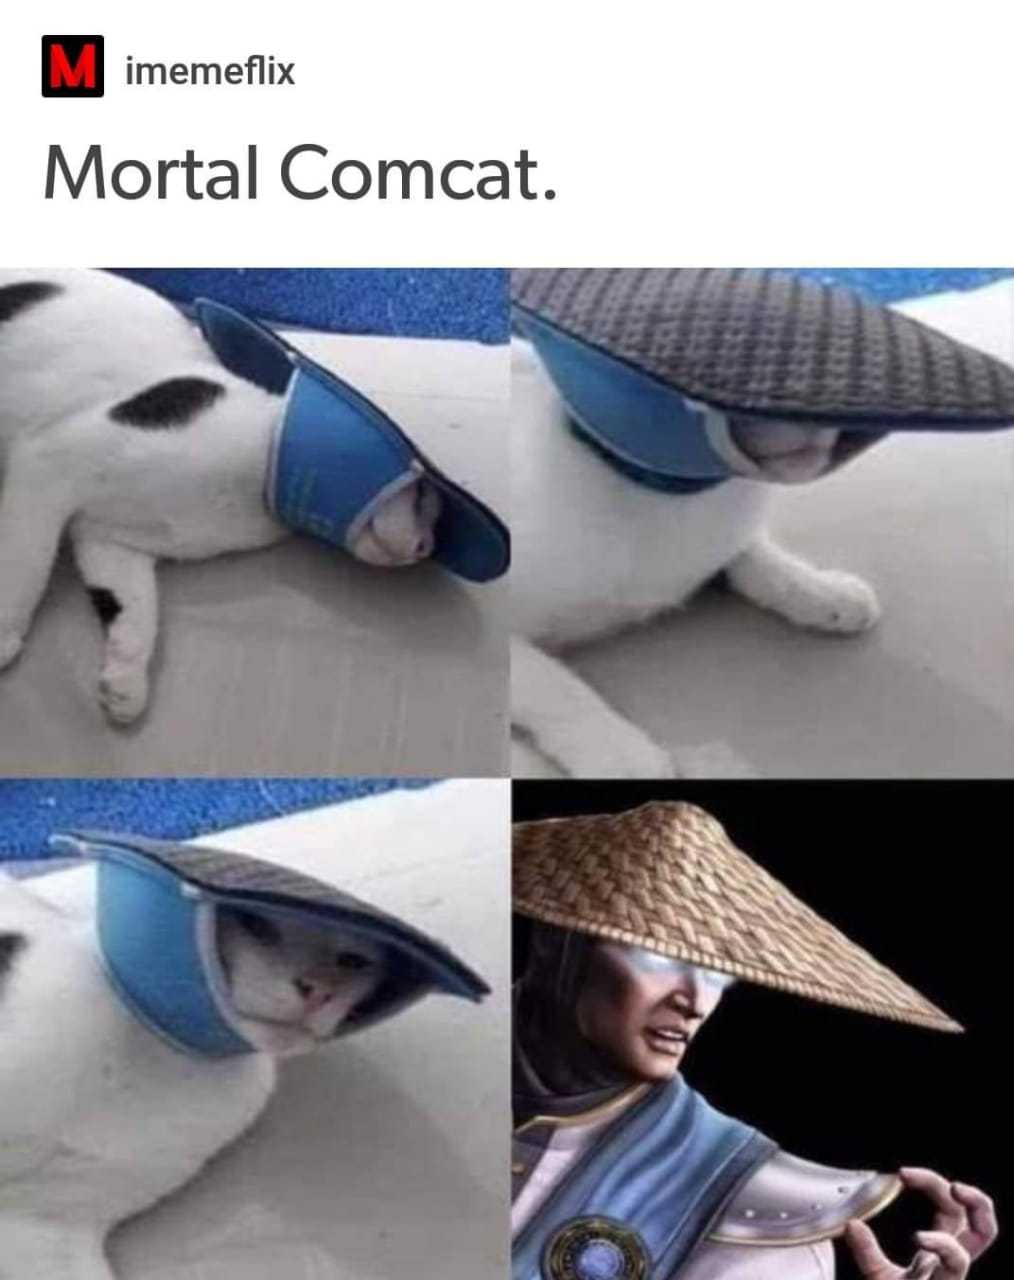 Mortal Komcat xd - meme